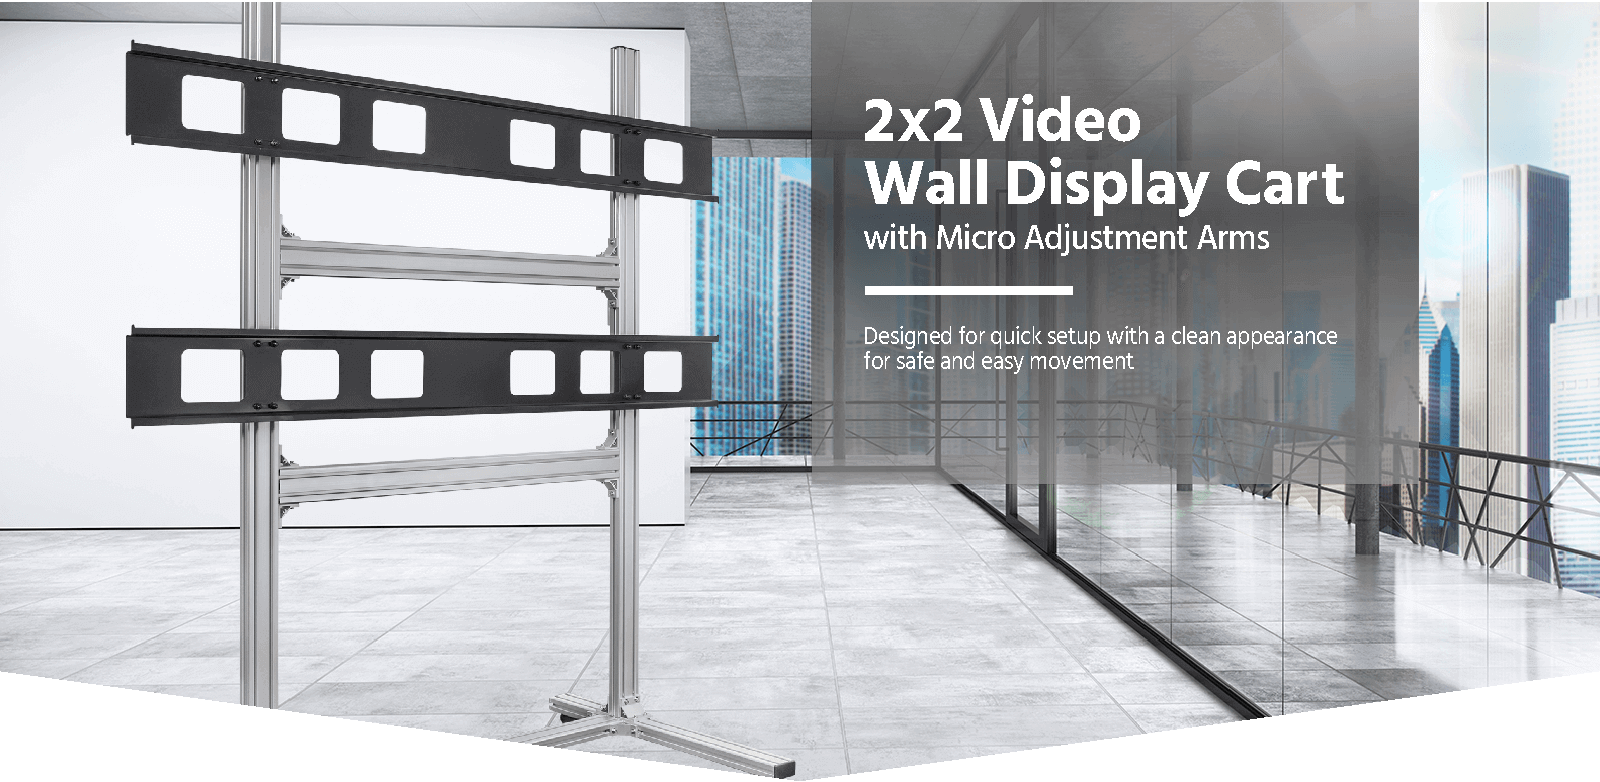 2x2 Video Wall Display Cart